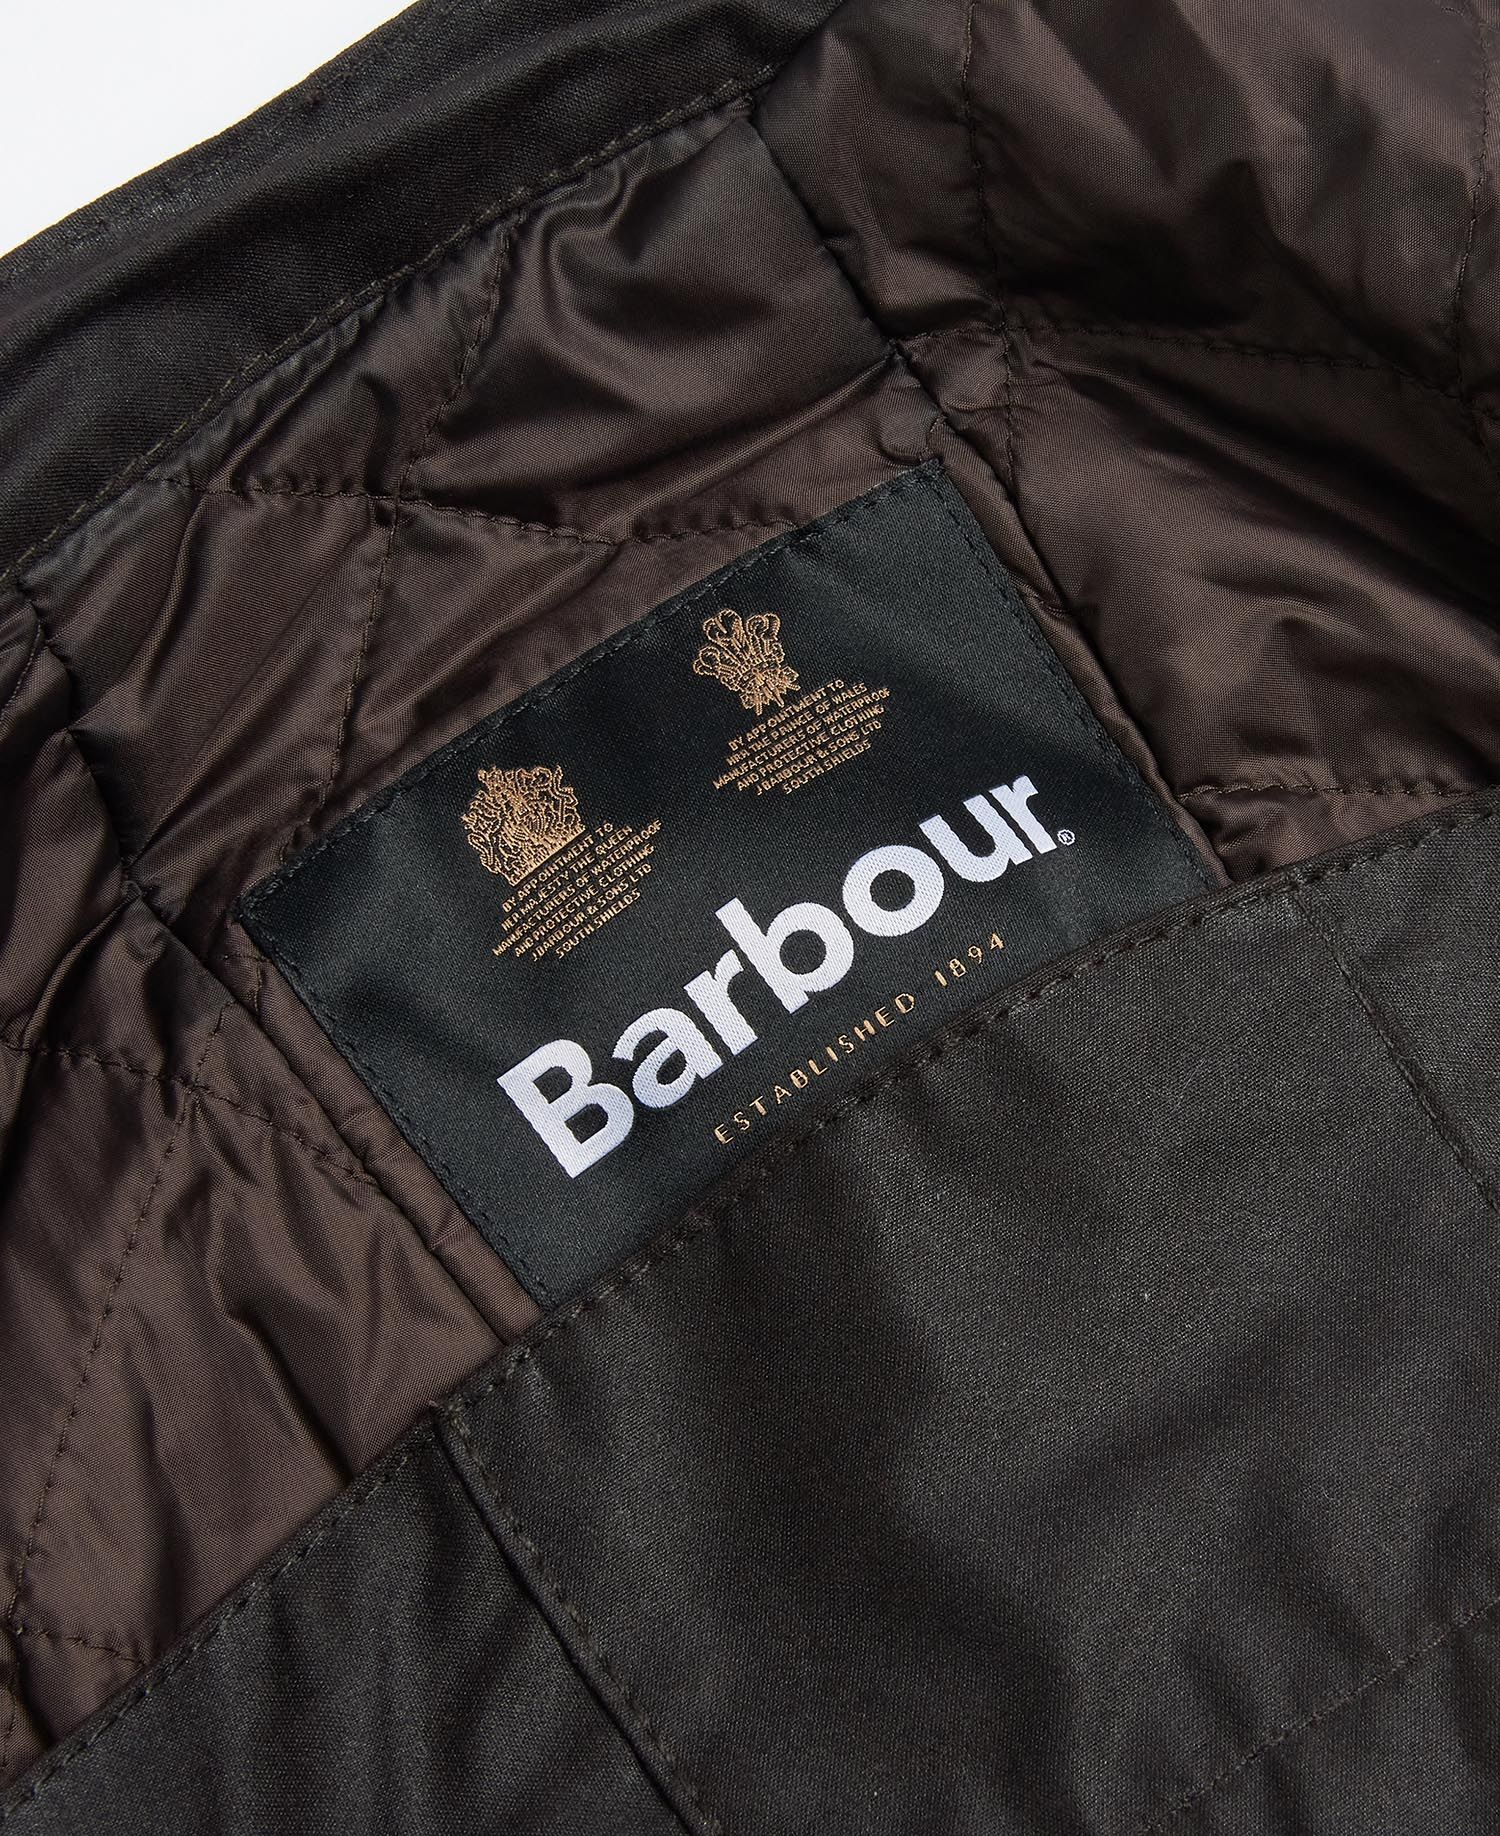 Barbour Waxed Storm Hood in Brown | Barbour